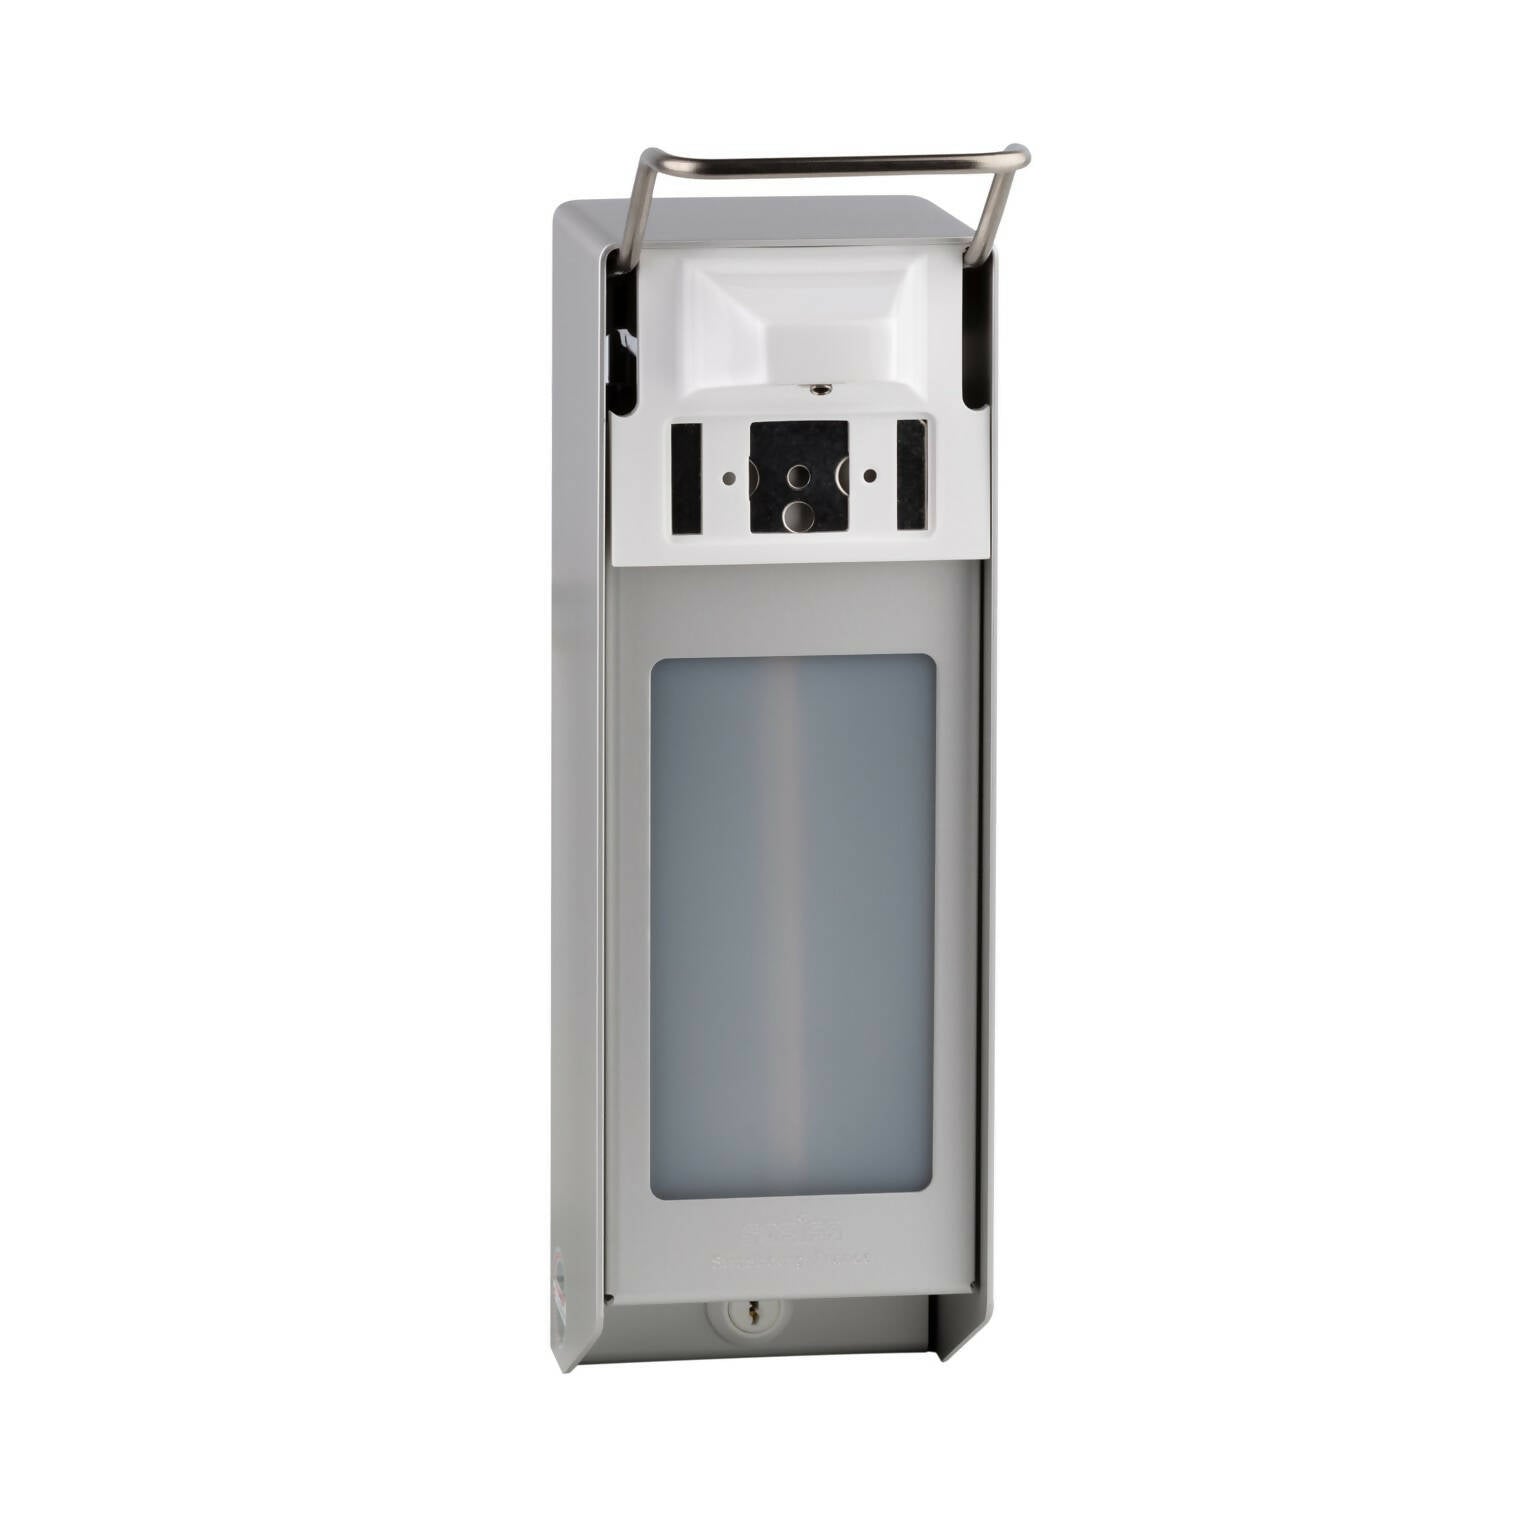 SORIFA - Robust, ergonomic, lockable metal wall dispenser for 1L SORIFA brand bottle - For gels and liquid soaps.